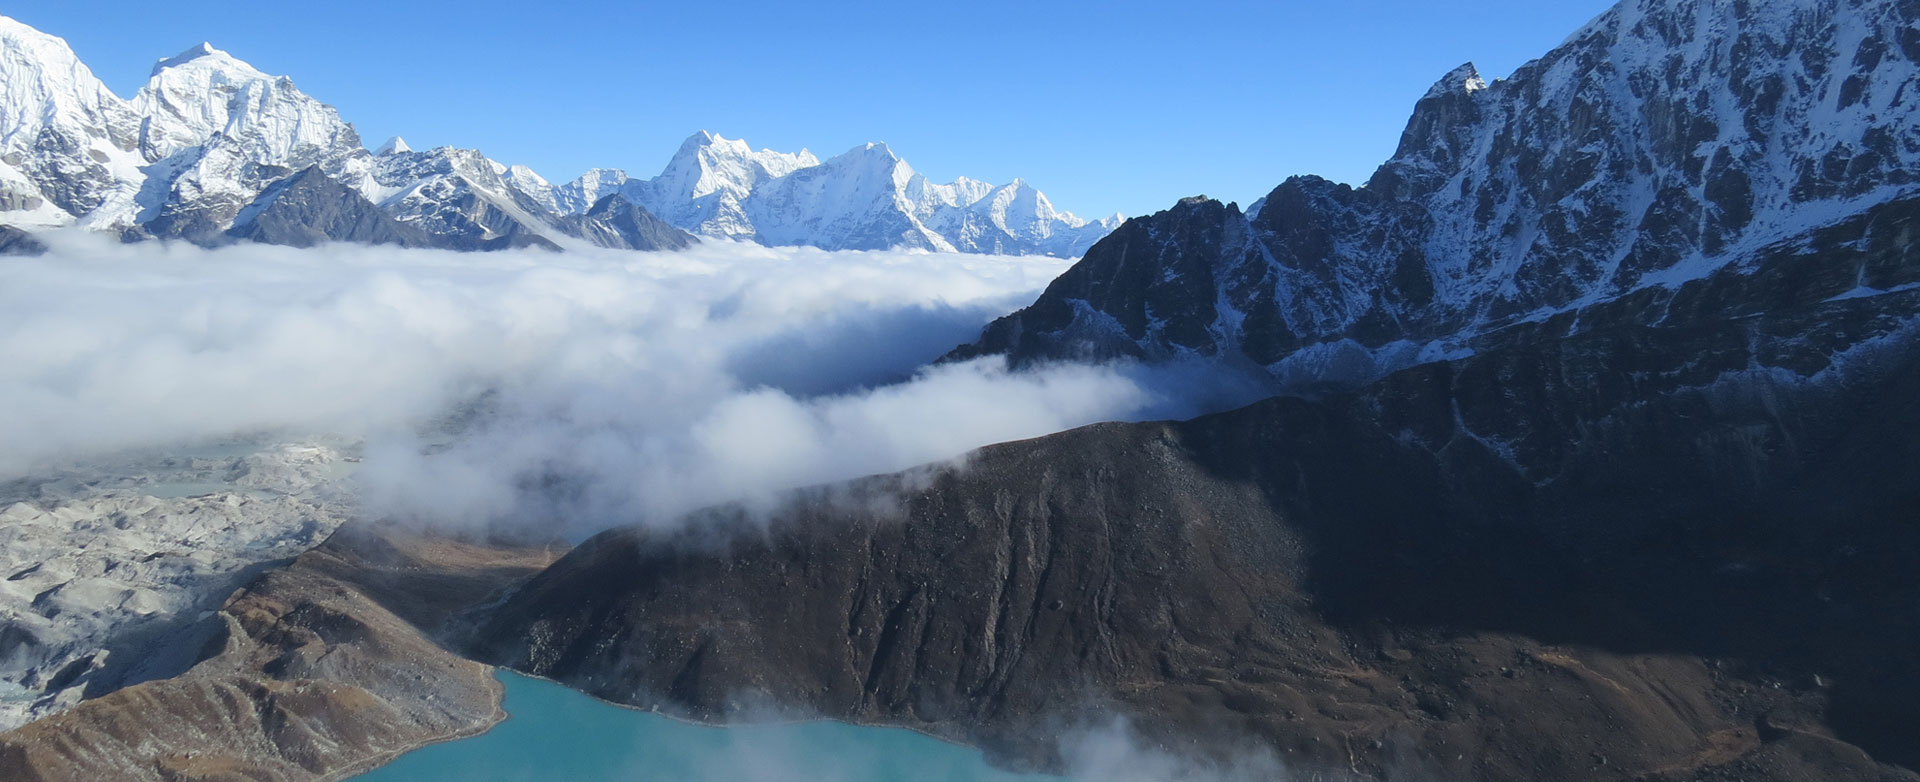 Goko Lakes - Everest Region